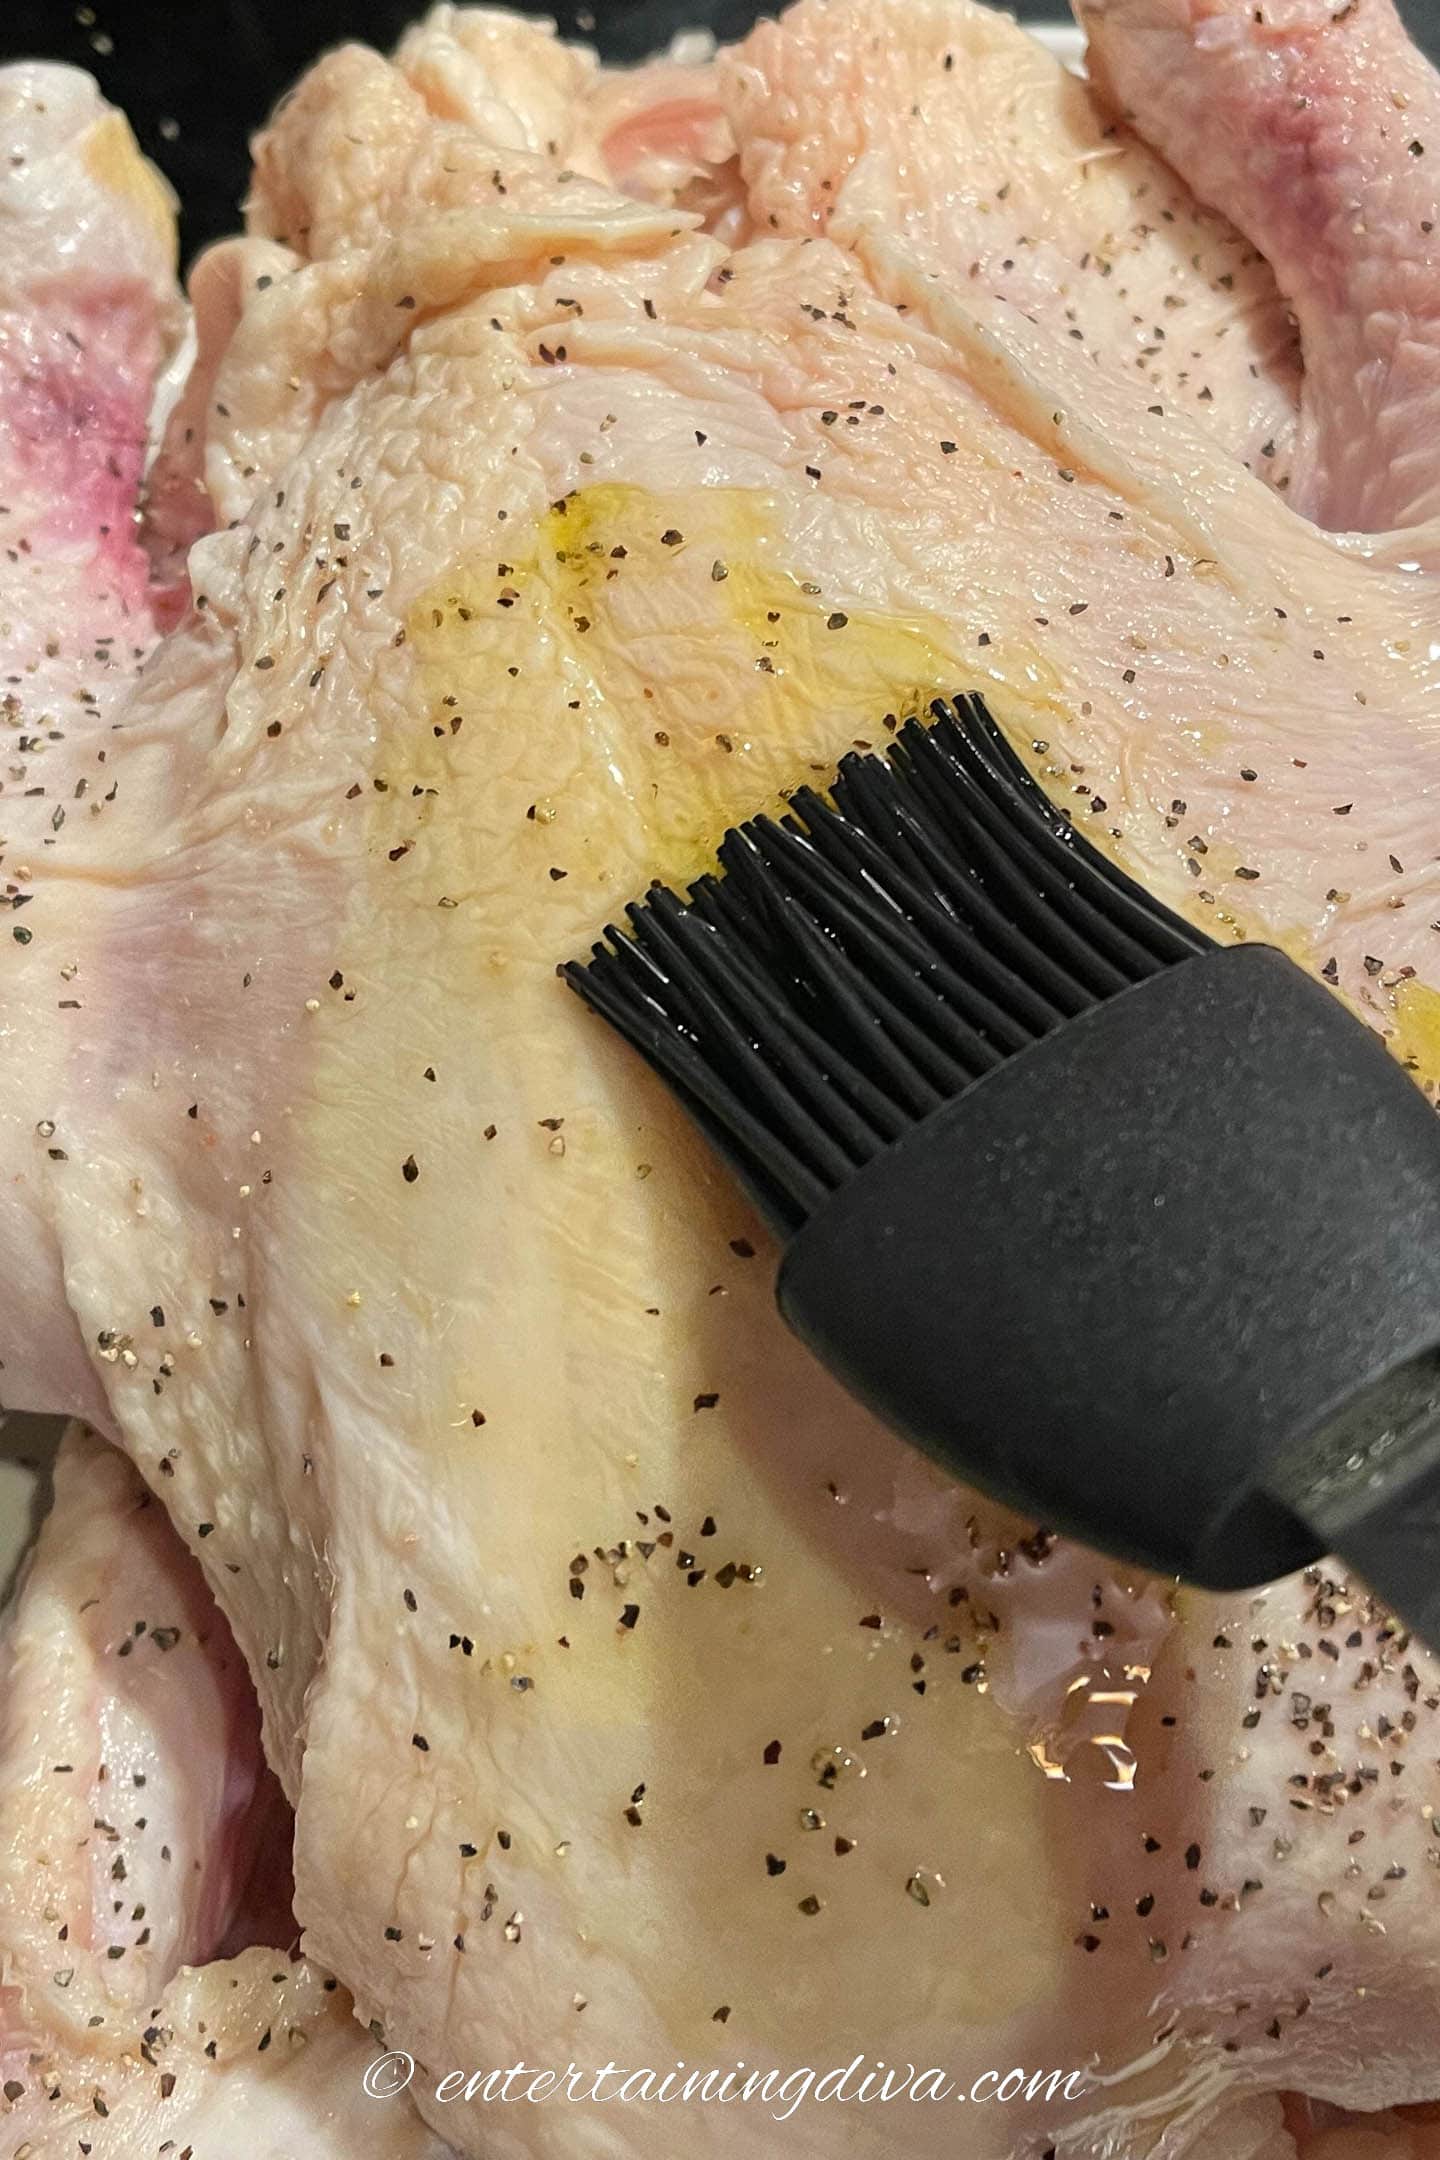 Brushing oil on a turkey